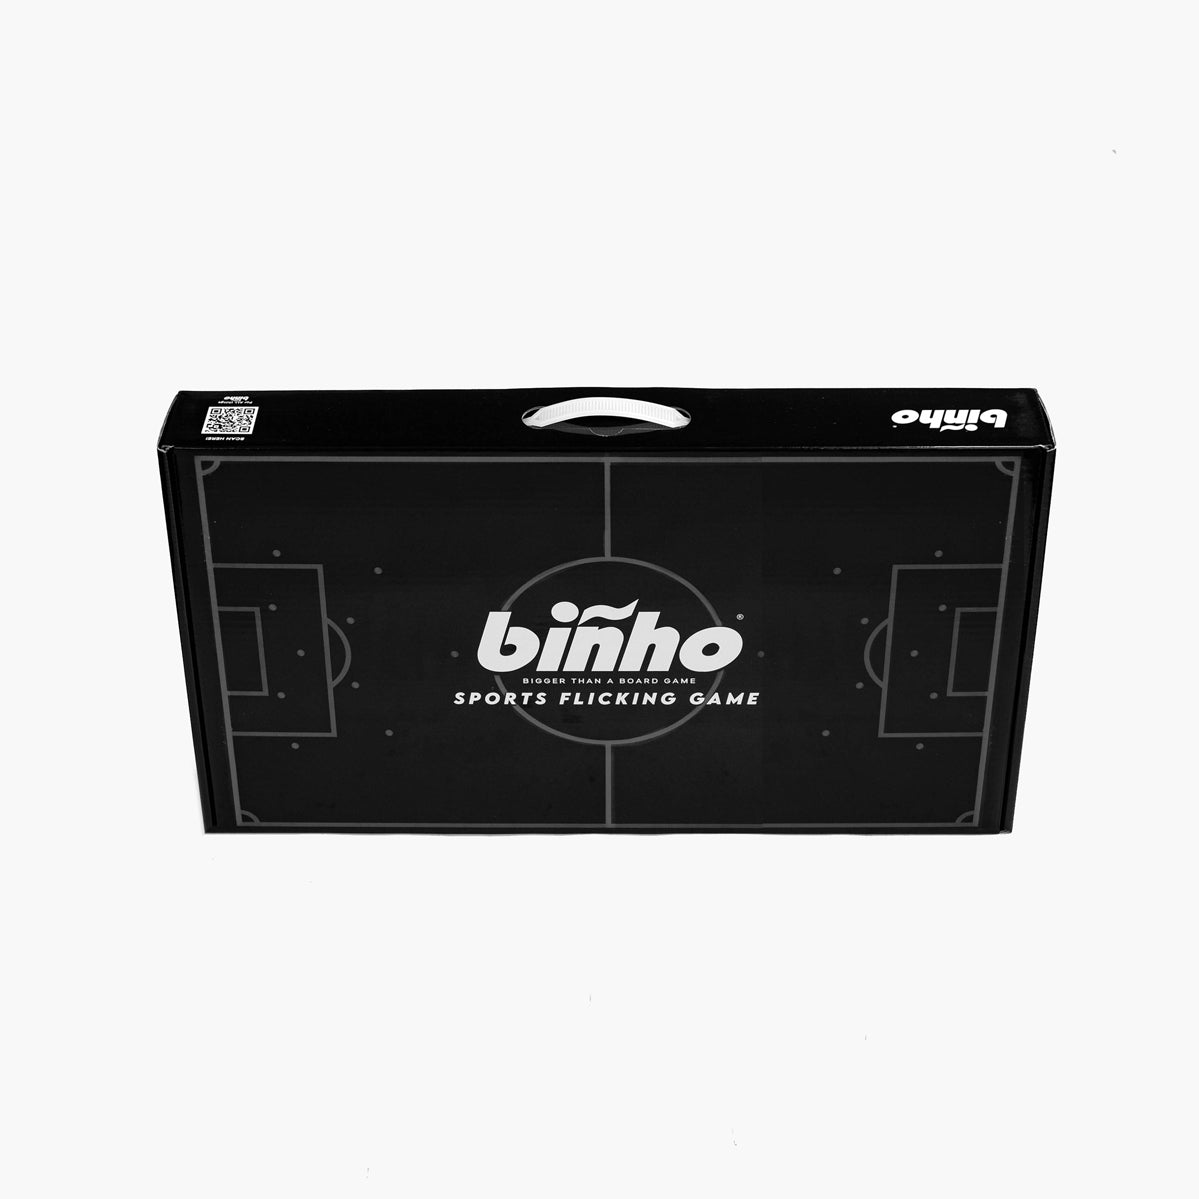 00001 | Binho Classic: BLACK Turf